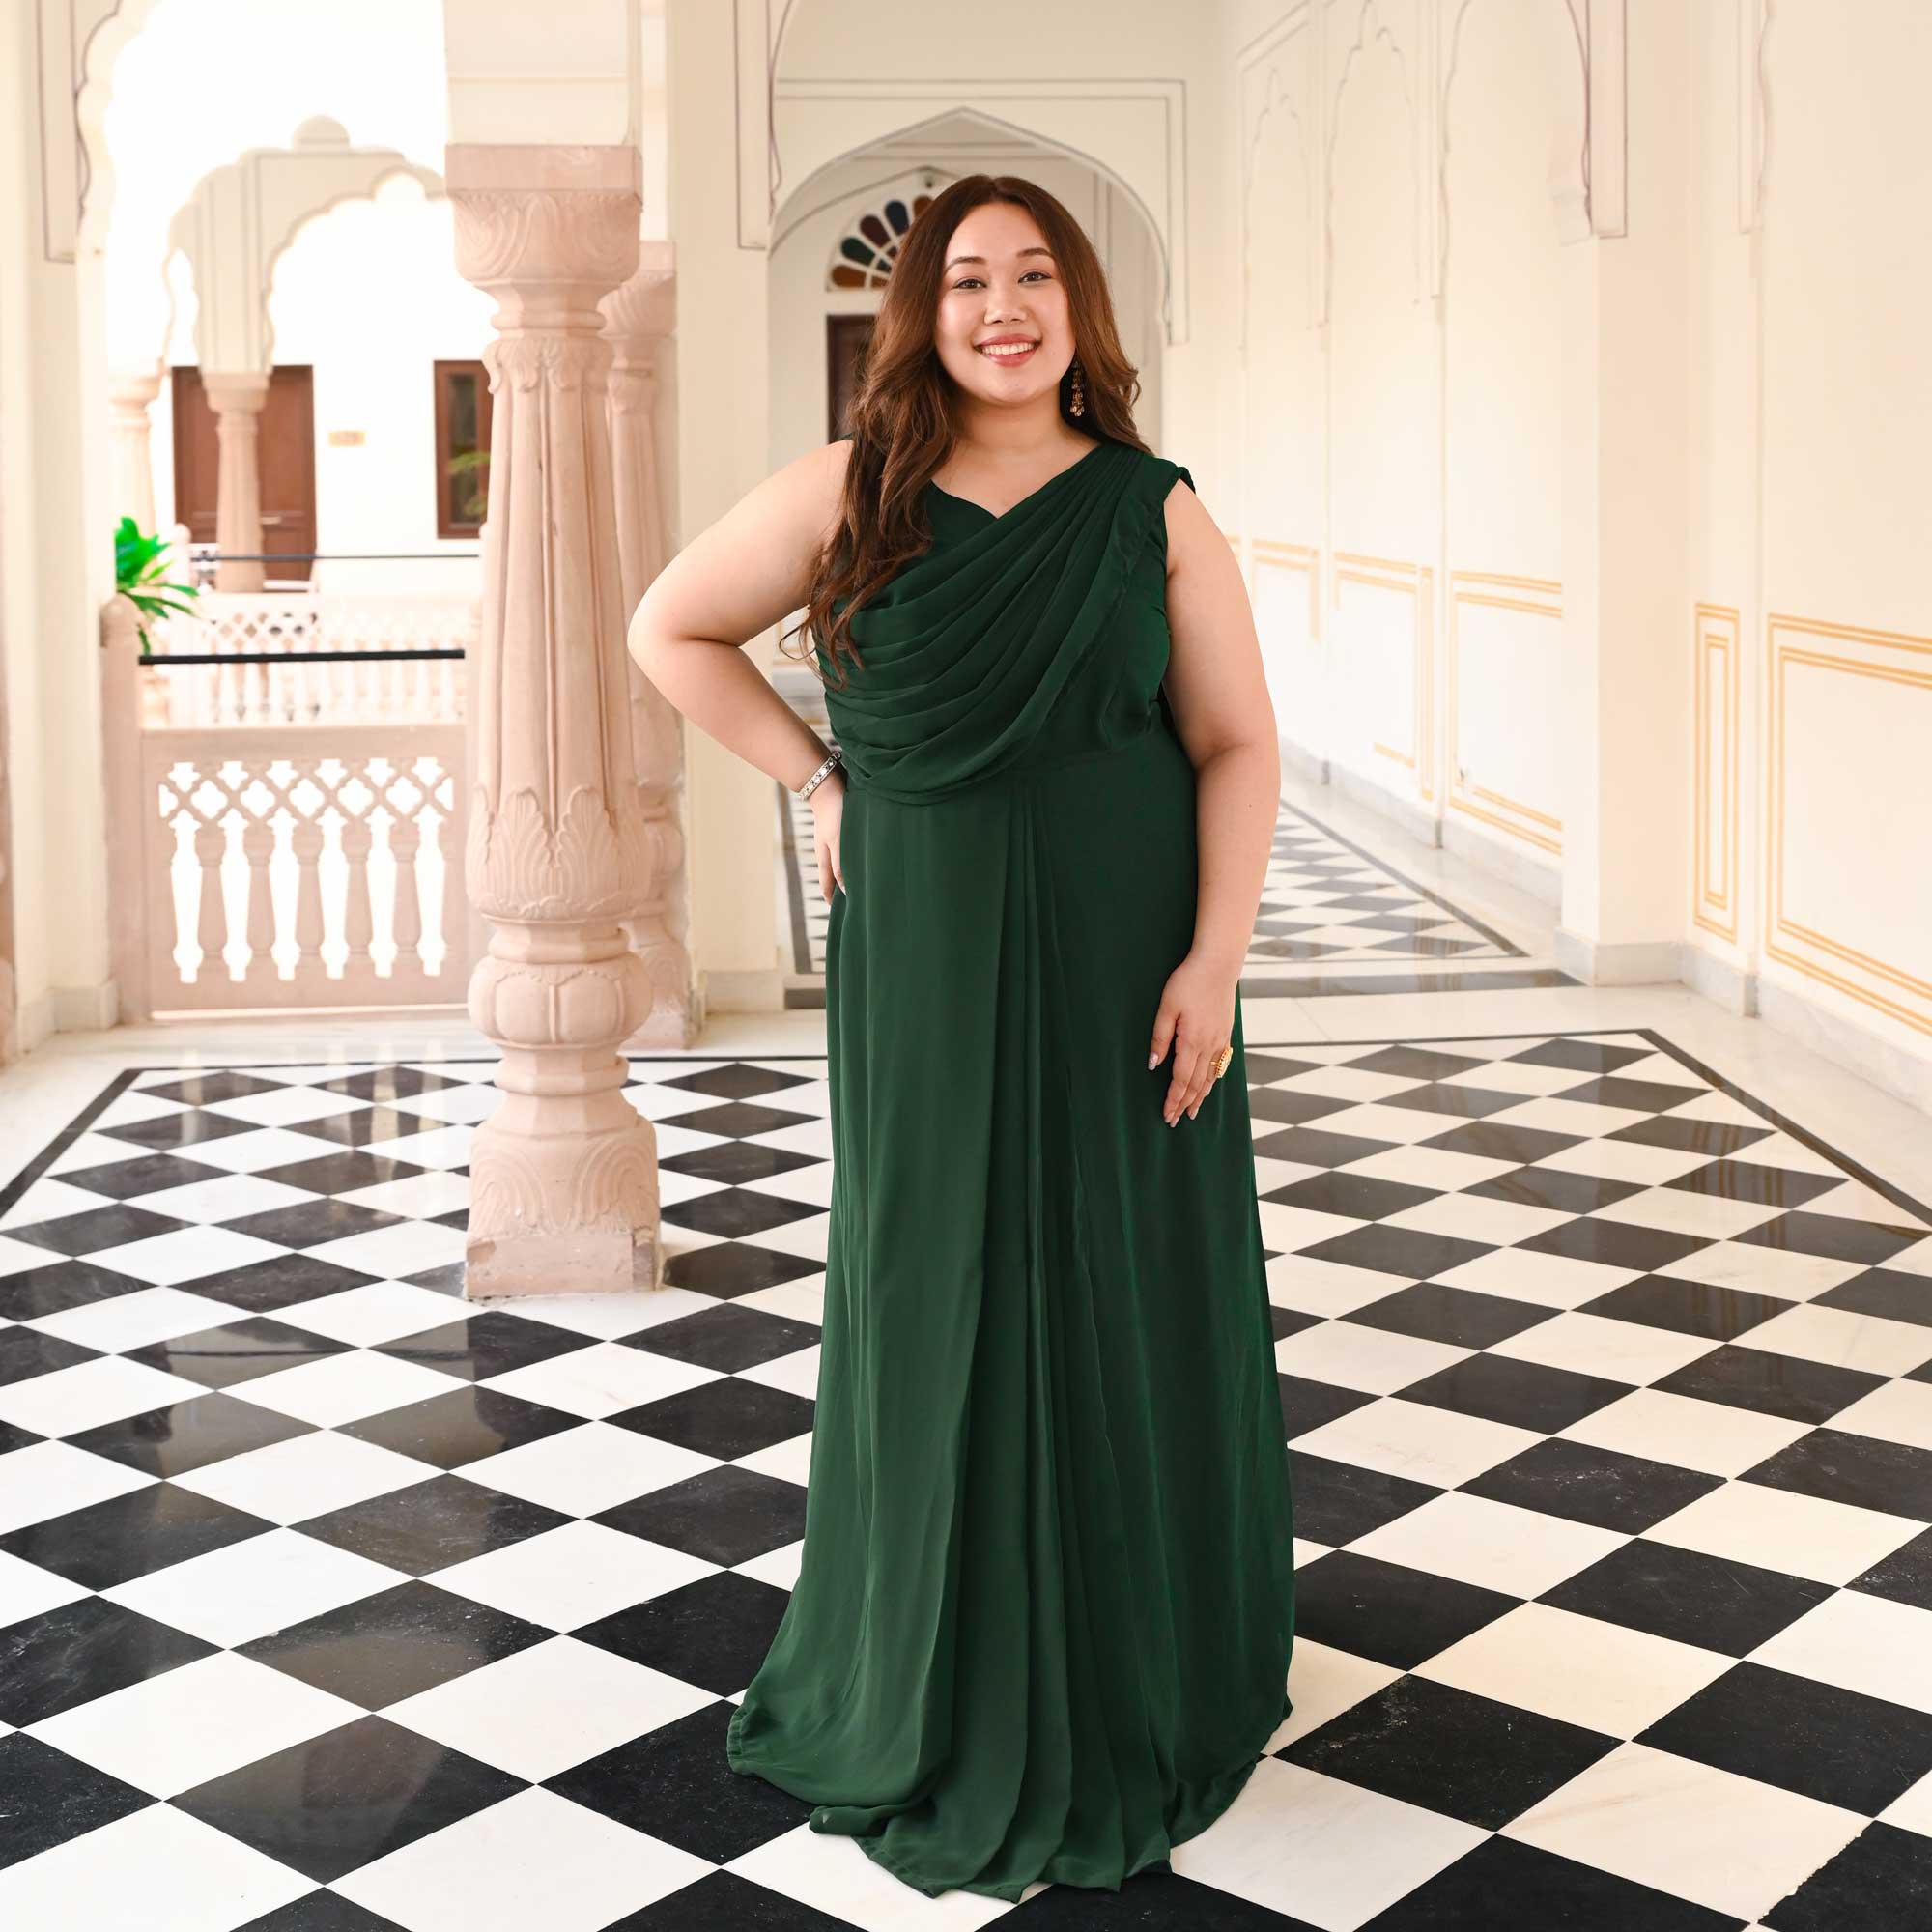 Woman Posing in an Elegant Saree Dress and Jewelry · Free Stock Photo